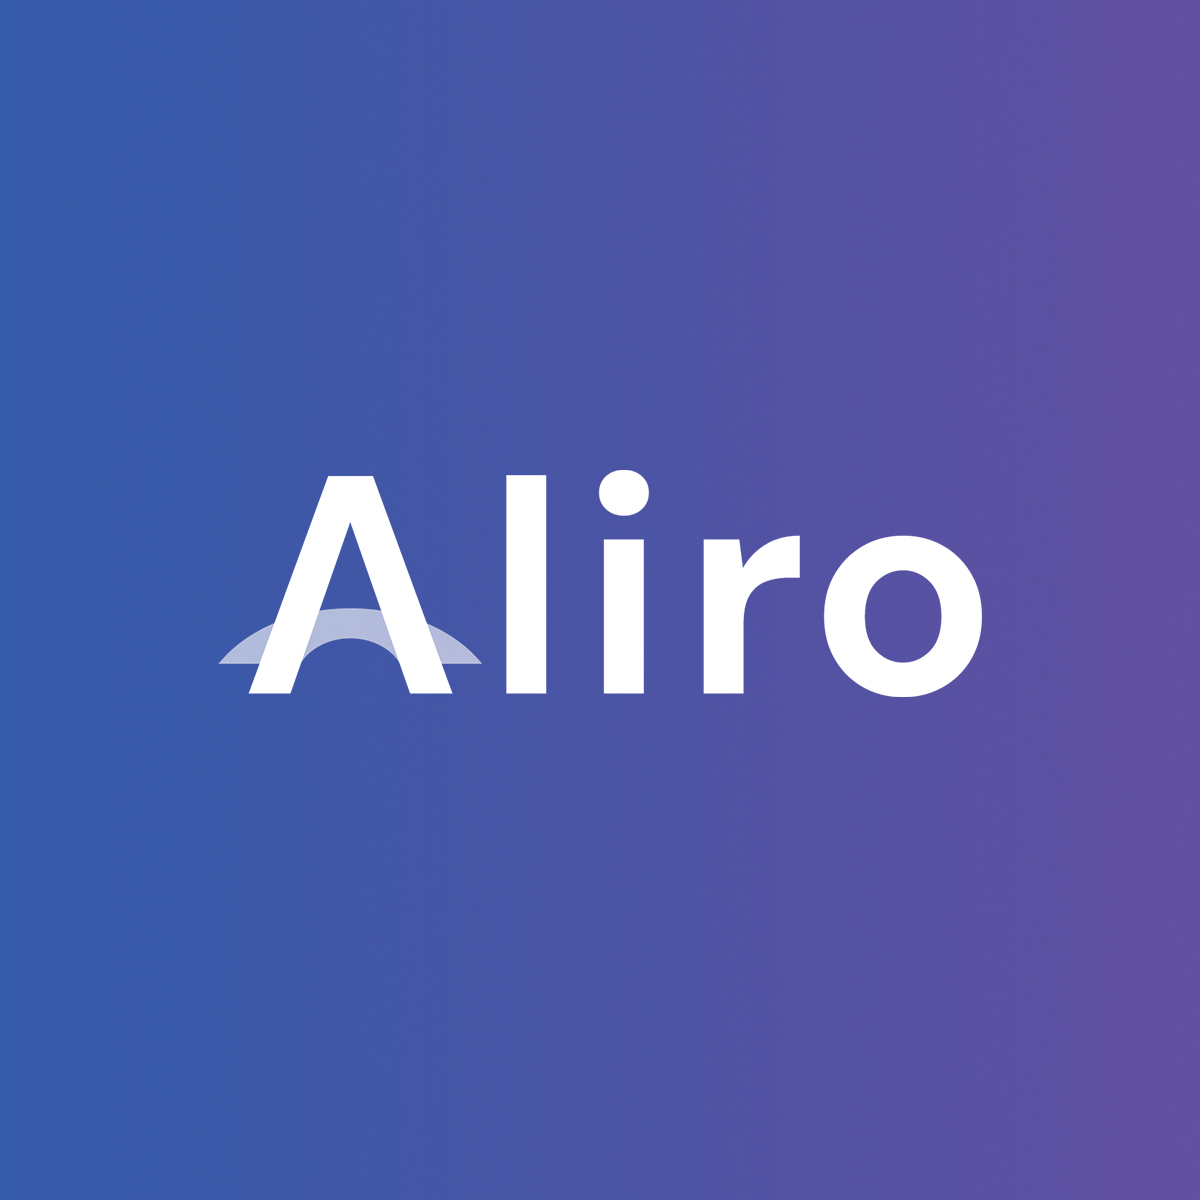 Aliro immigration logo square